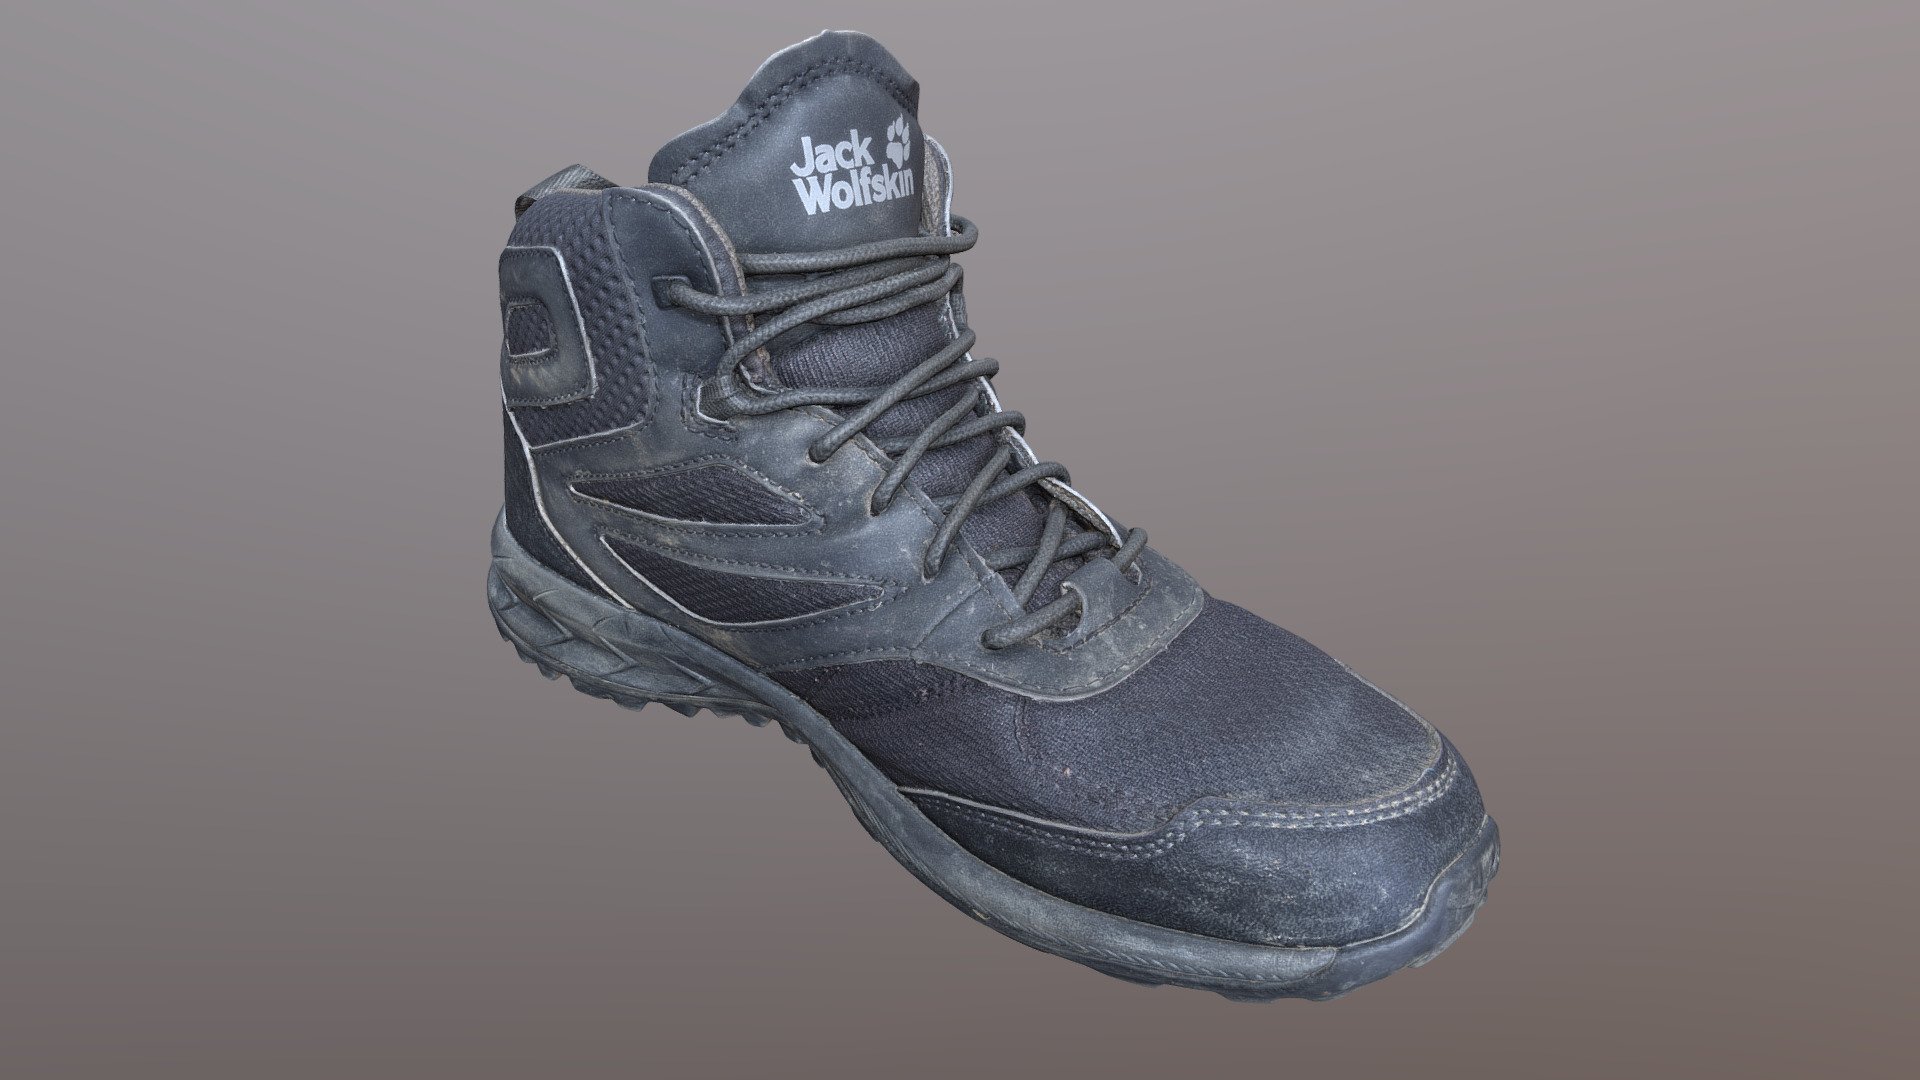 Jack Wolfskin Boots - 3D model by maximus.ua [ce1e538] - Sketchfab